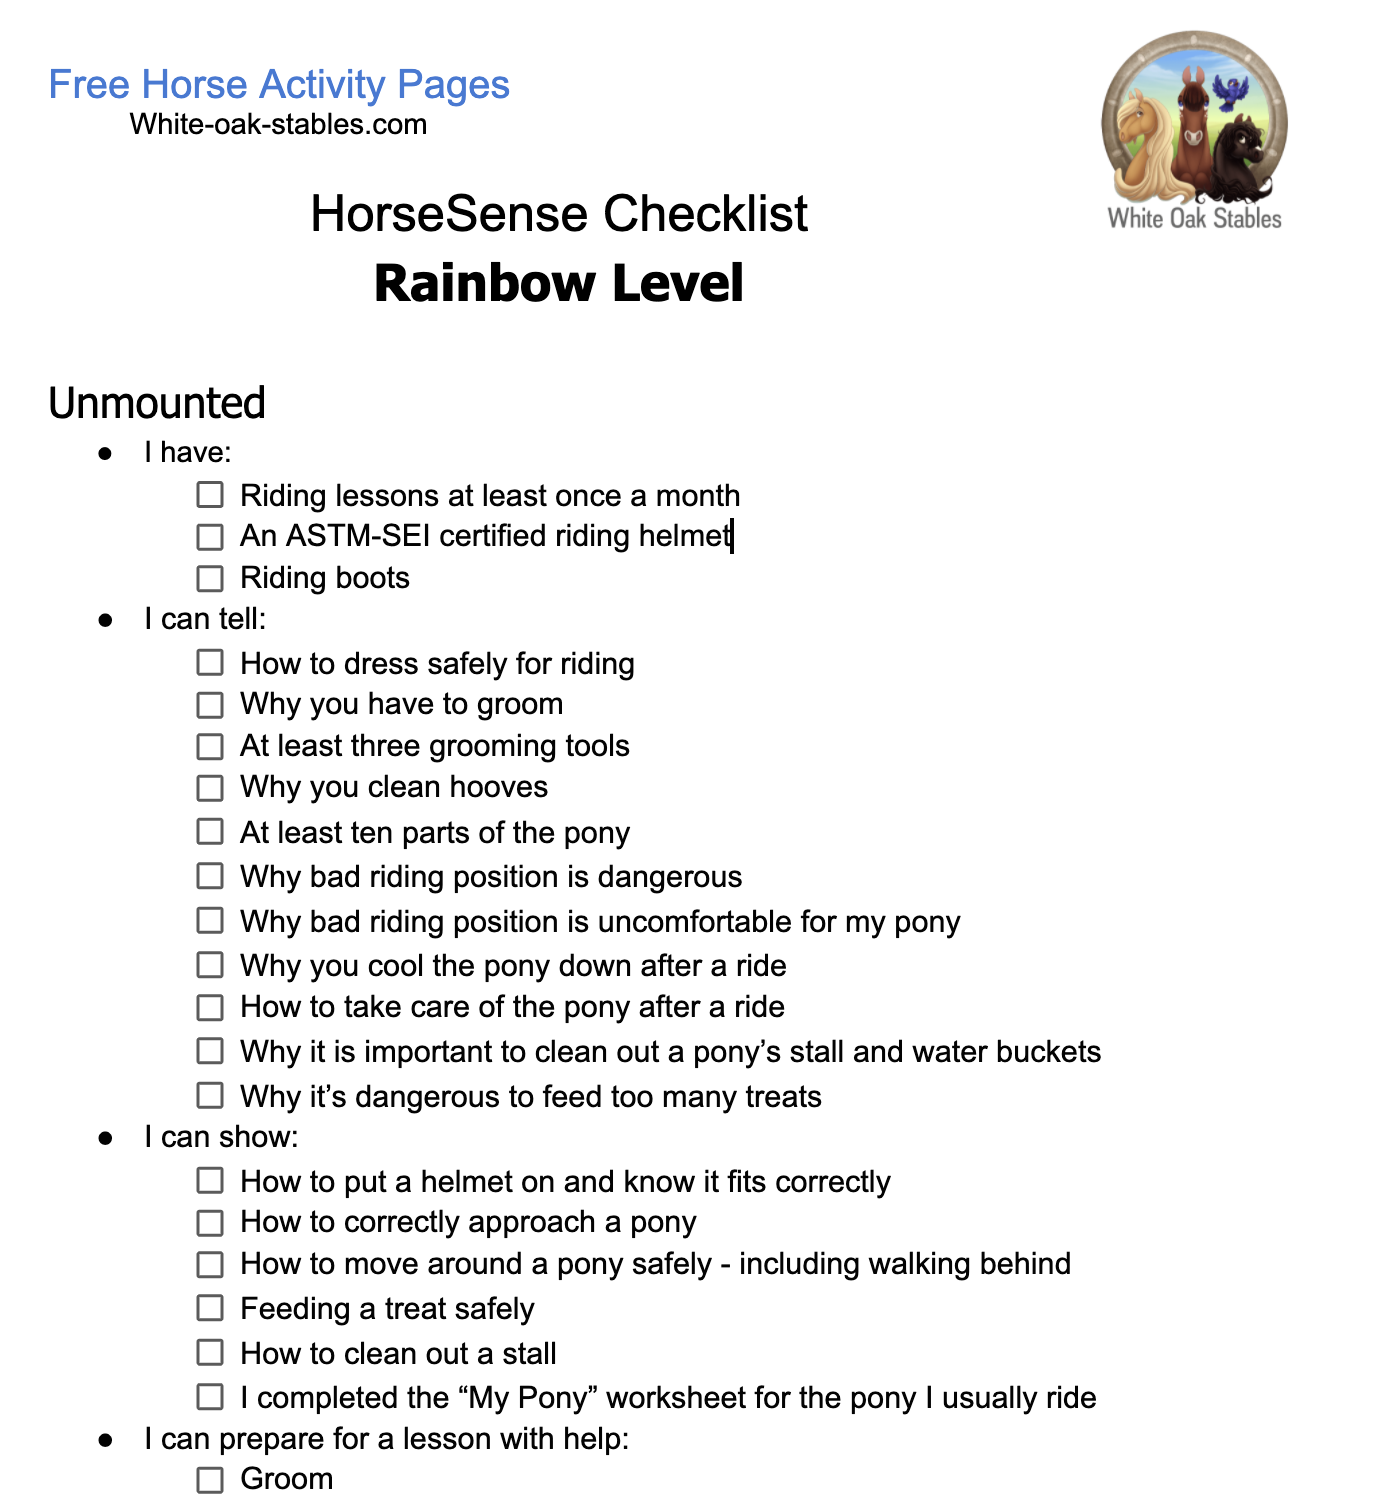 HorseSense Checklist